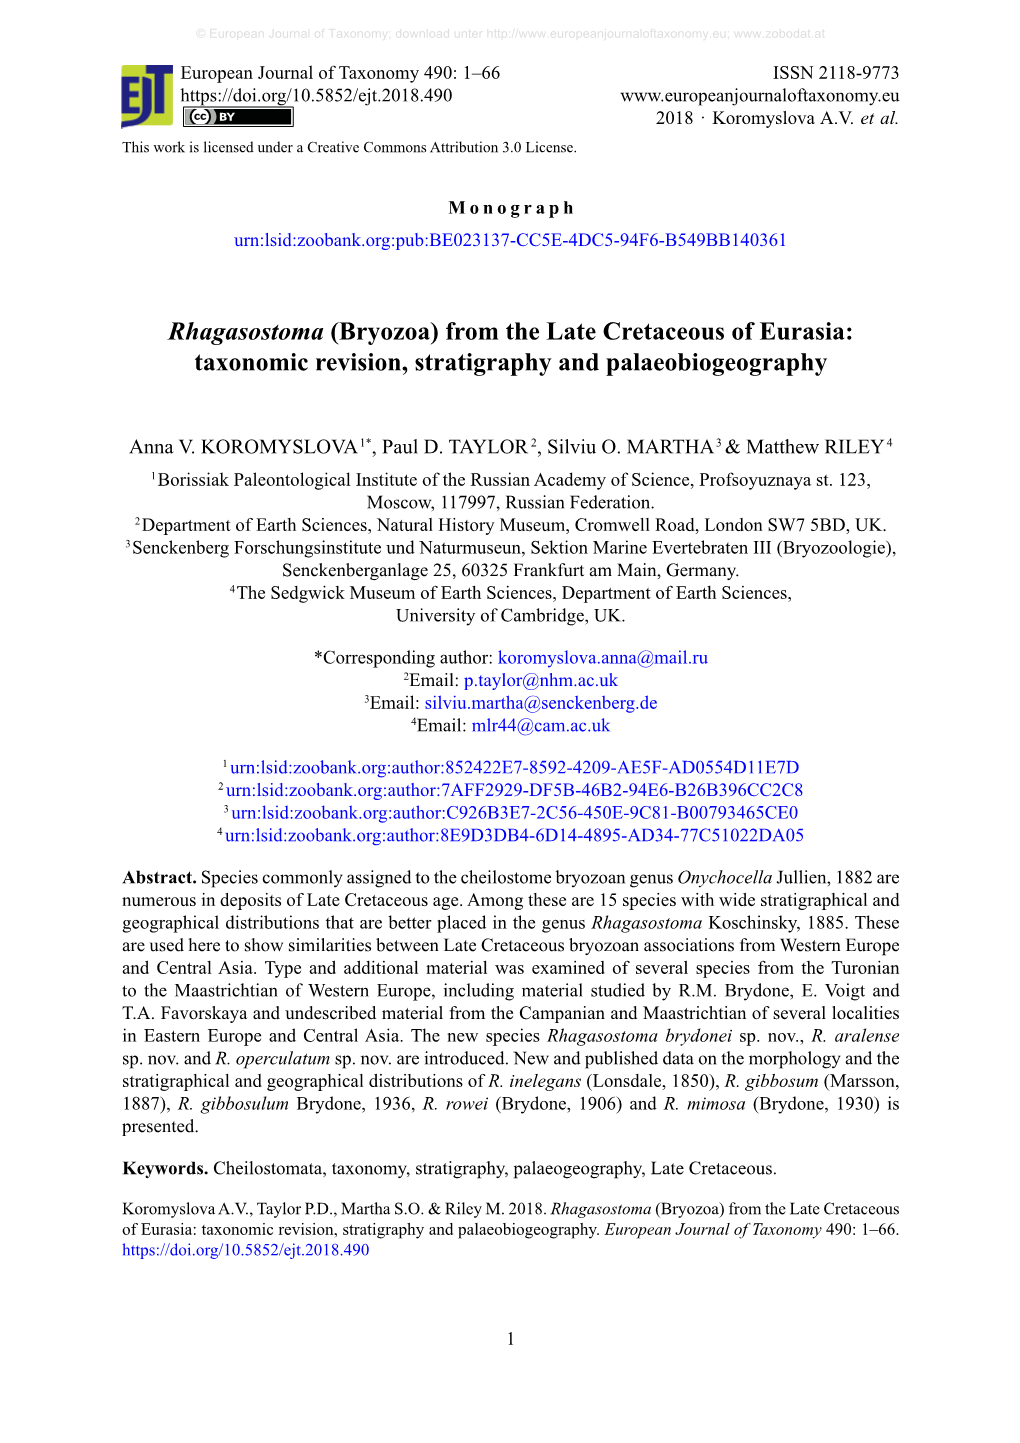 Rhagasostoma (Bryozoa) from the Late Cretaceous of Eurasia: Taxonomic Revision, Stratigraphy and Palaeobiogeography